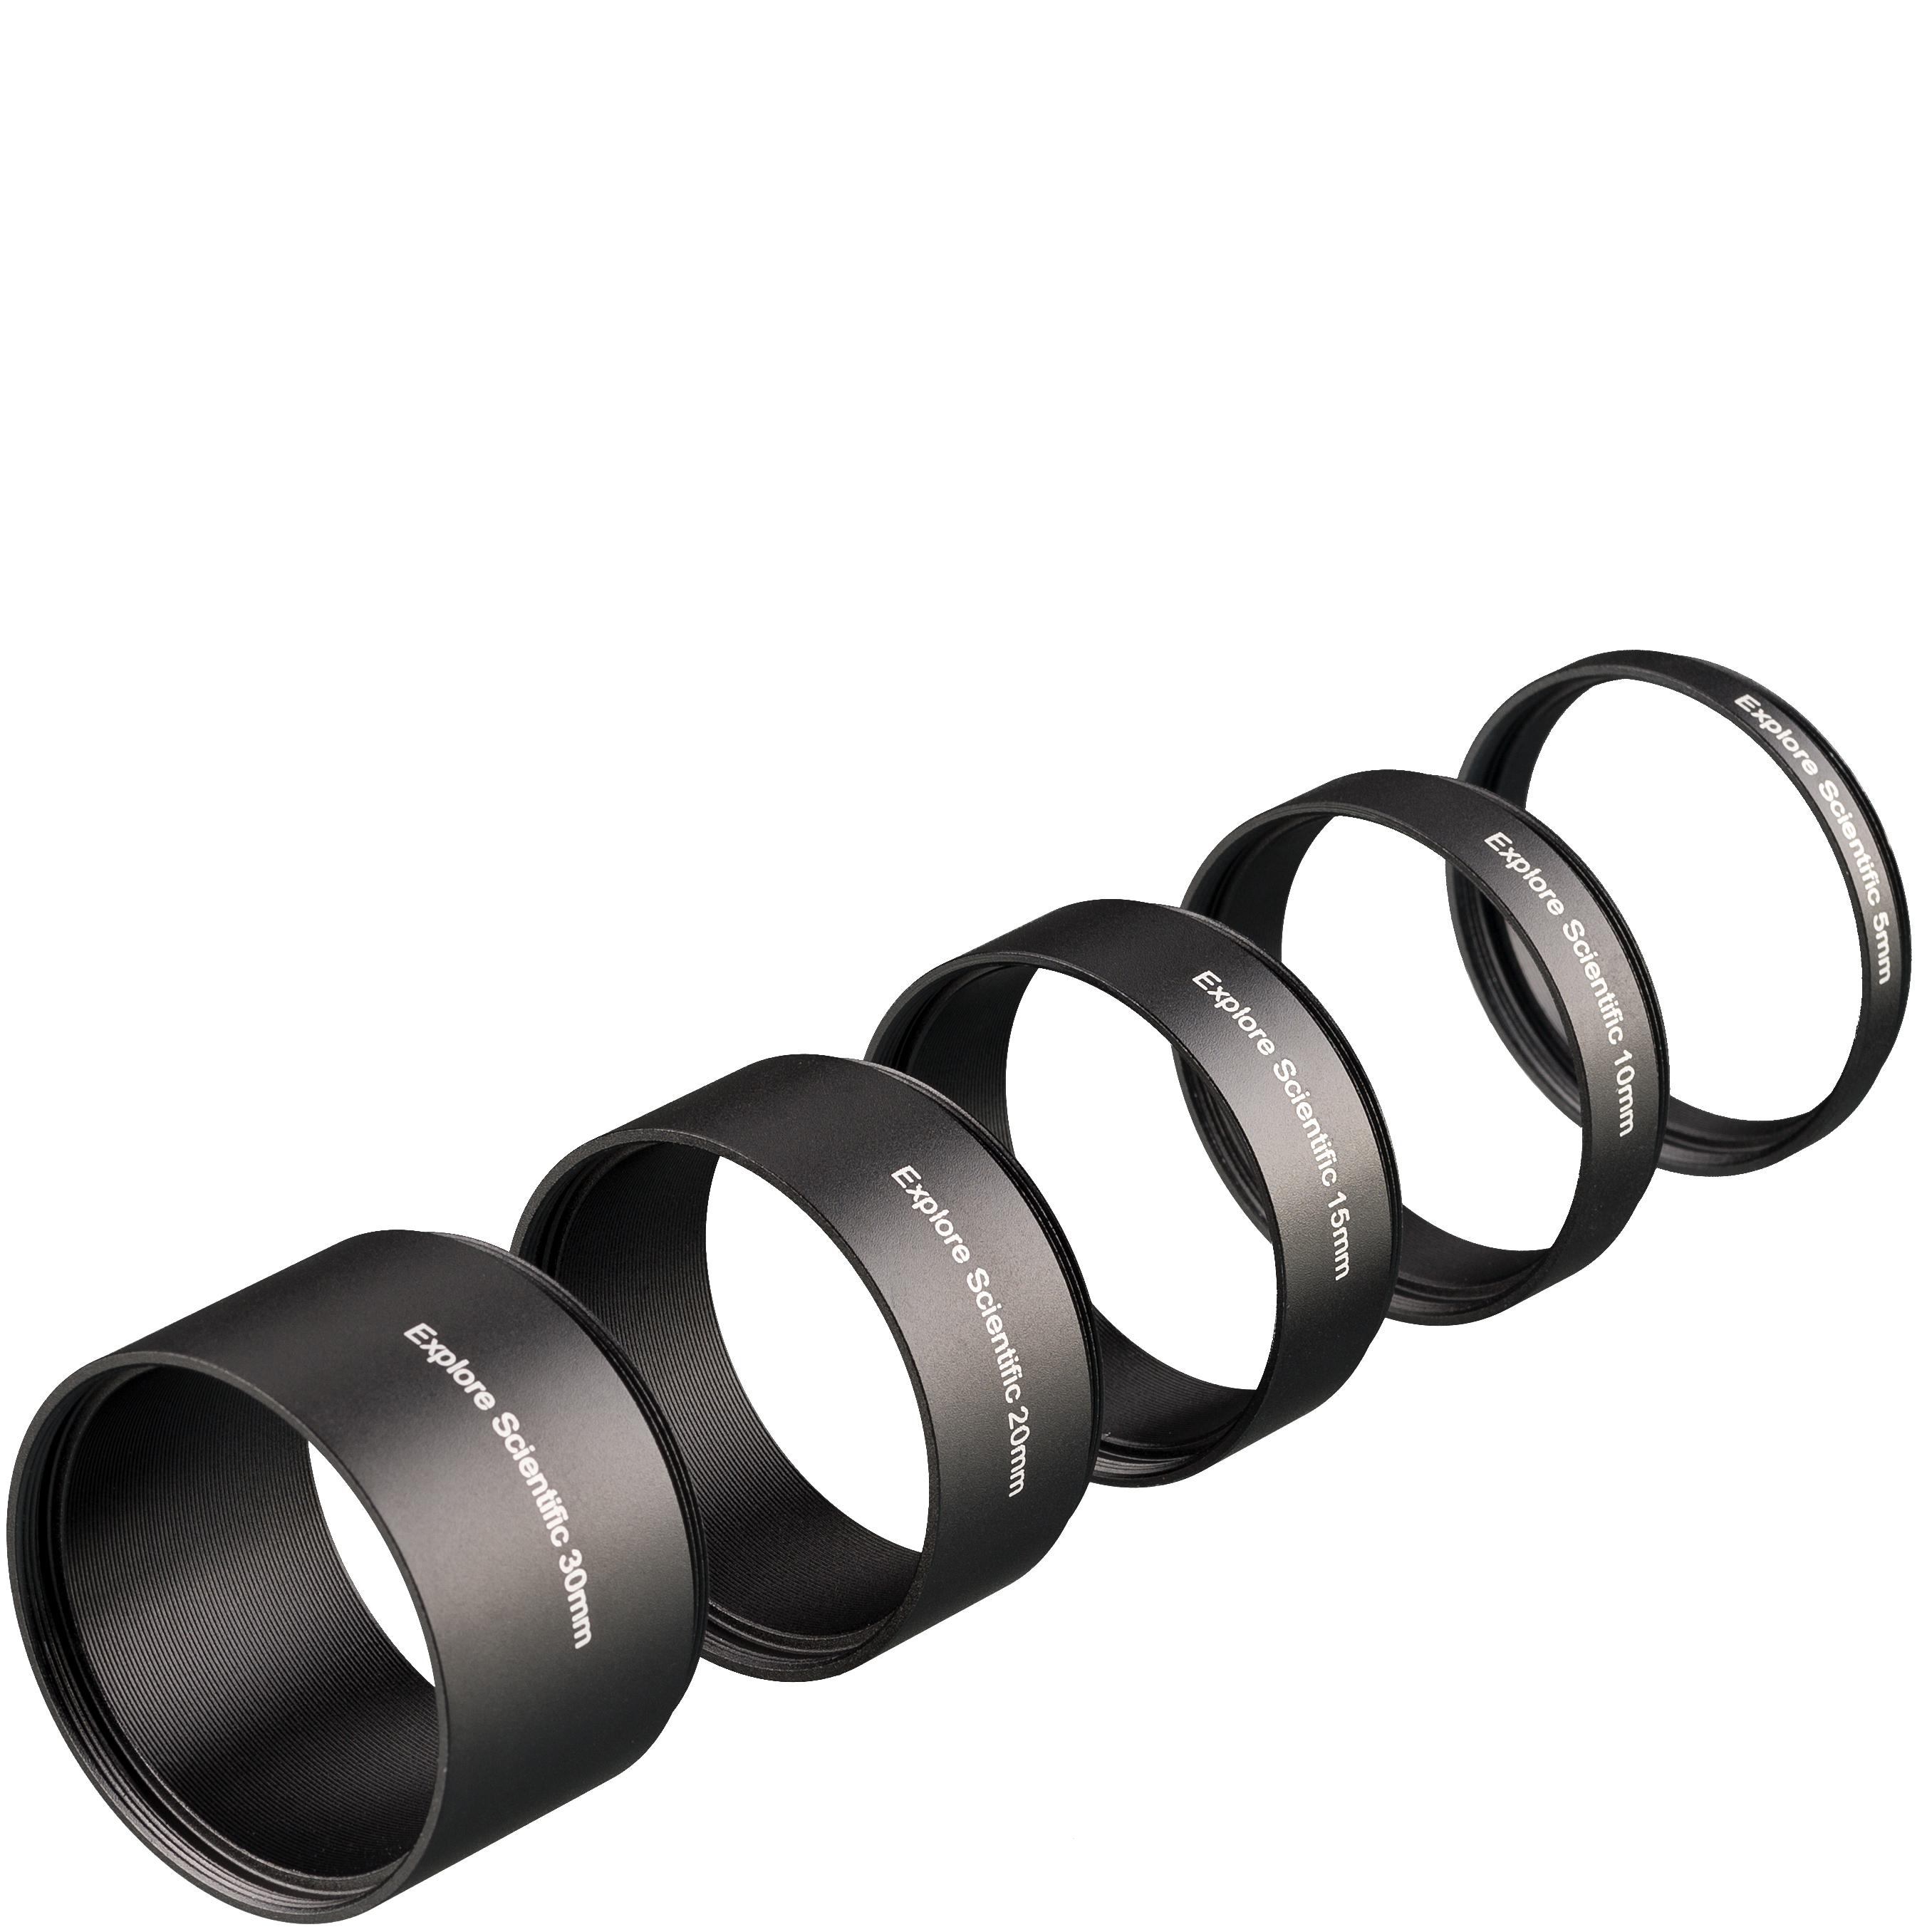 EXPLORE SCIENTIFIC Extension Ring Set M48x0.75 - 5 pieces (30, 20, 15, 10 and 5 mm)